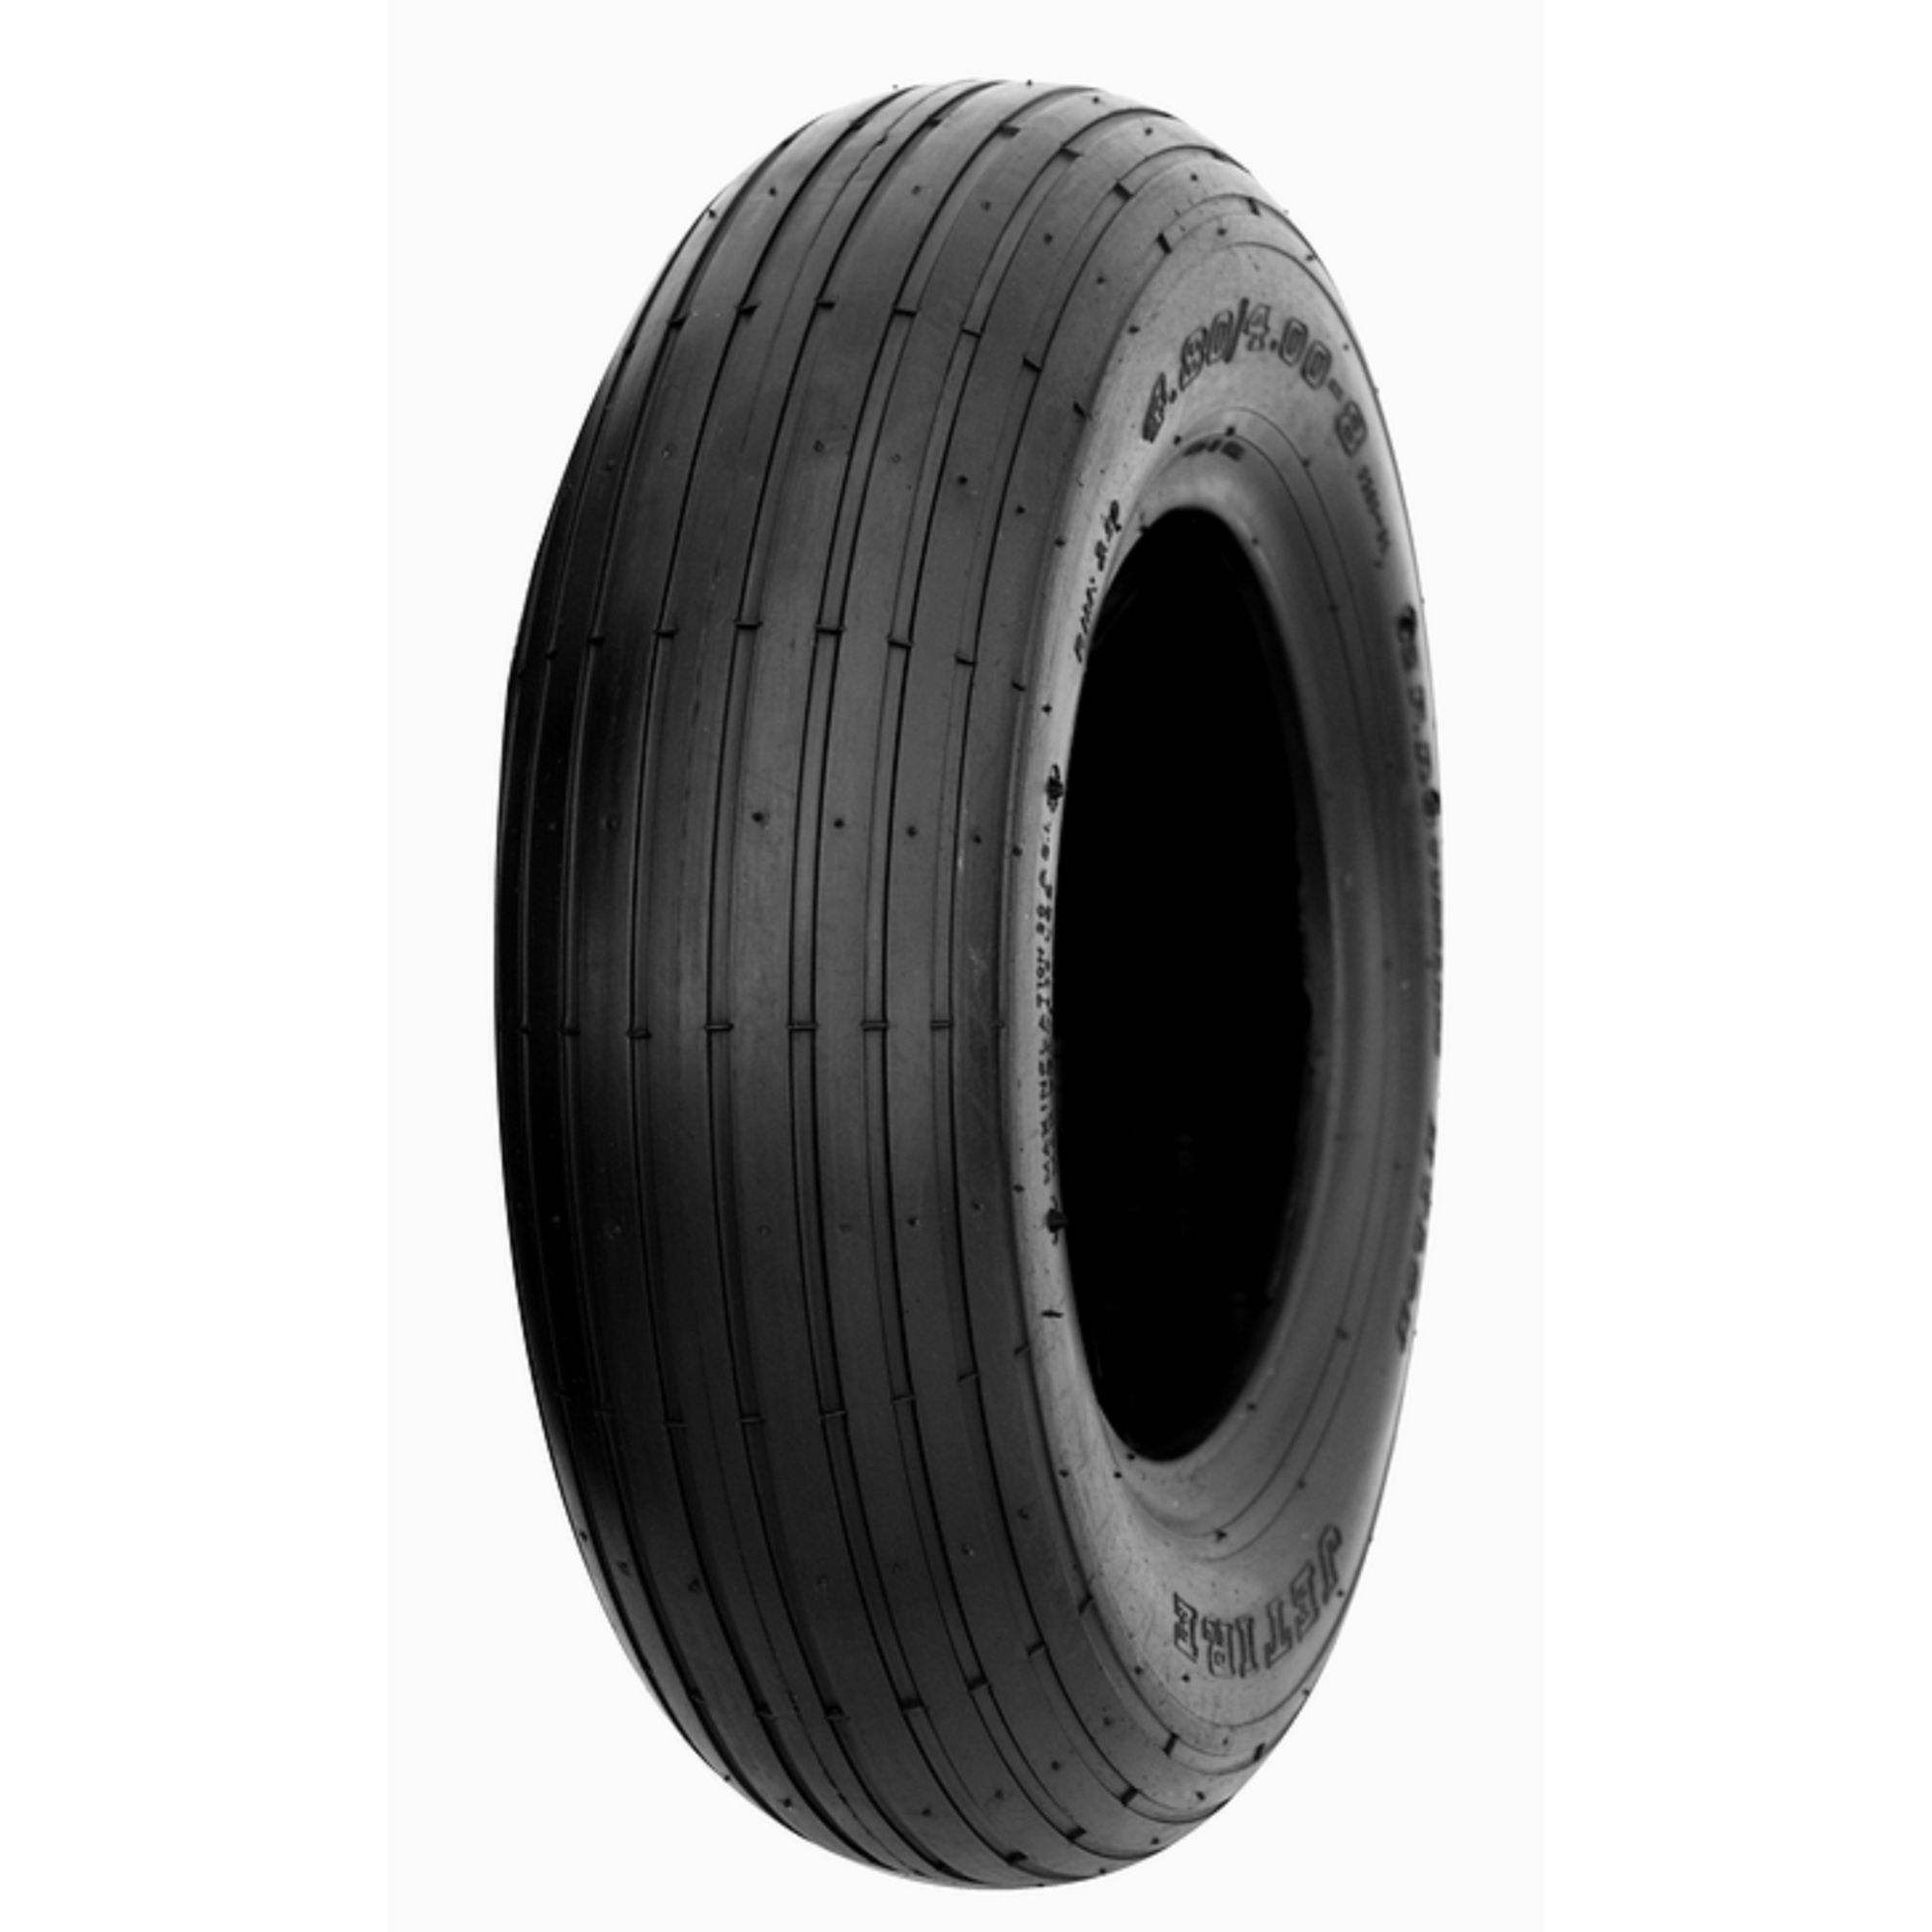 HI-RUN, Wheel Barrow Tire, 4 ply, Rib, Tire Size 4.00-6 Load Range Rating B, Model CT1006